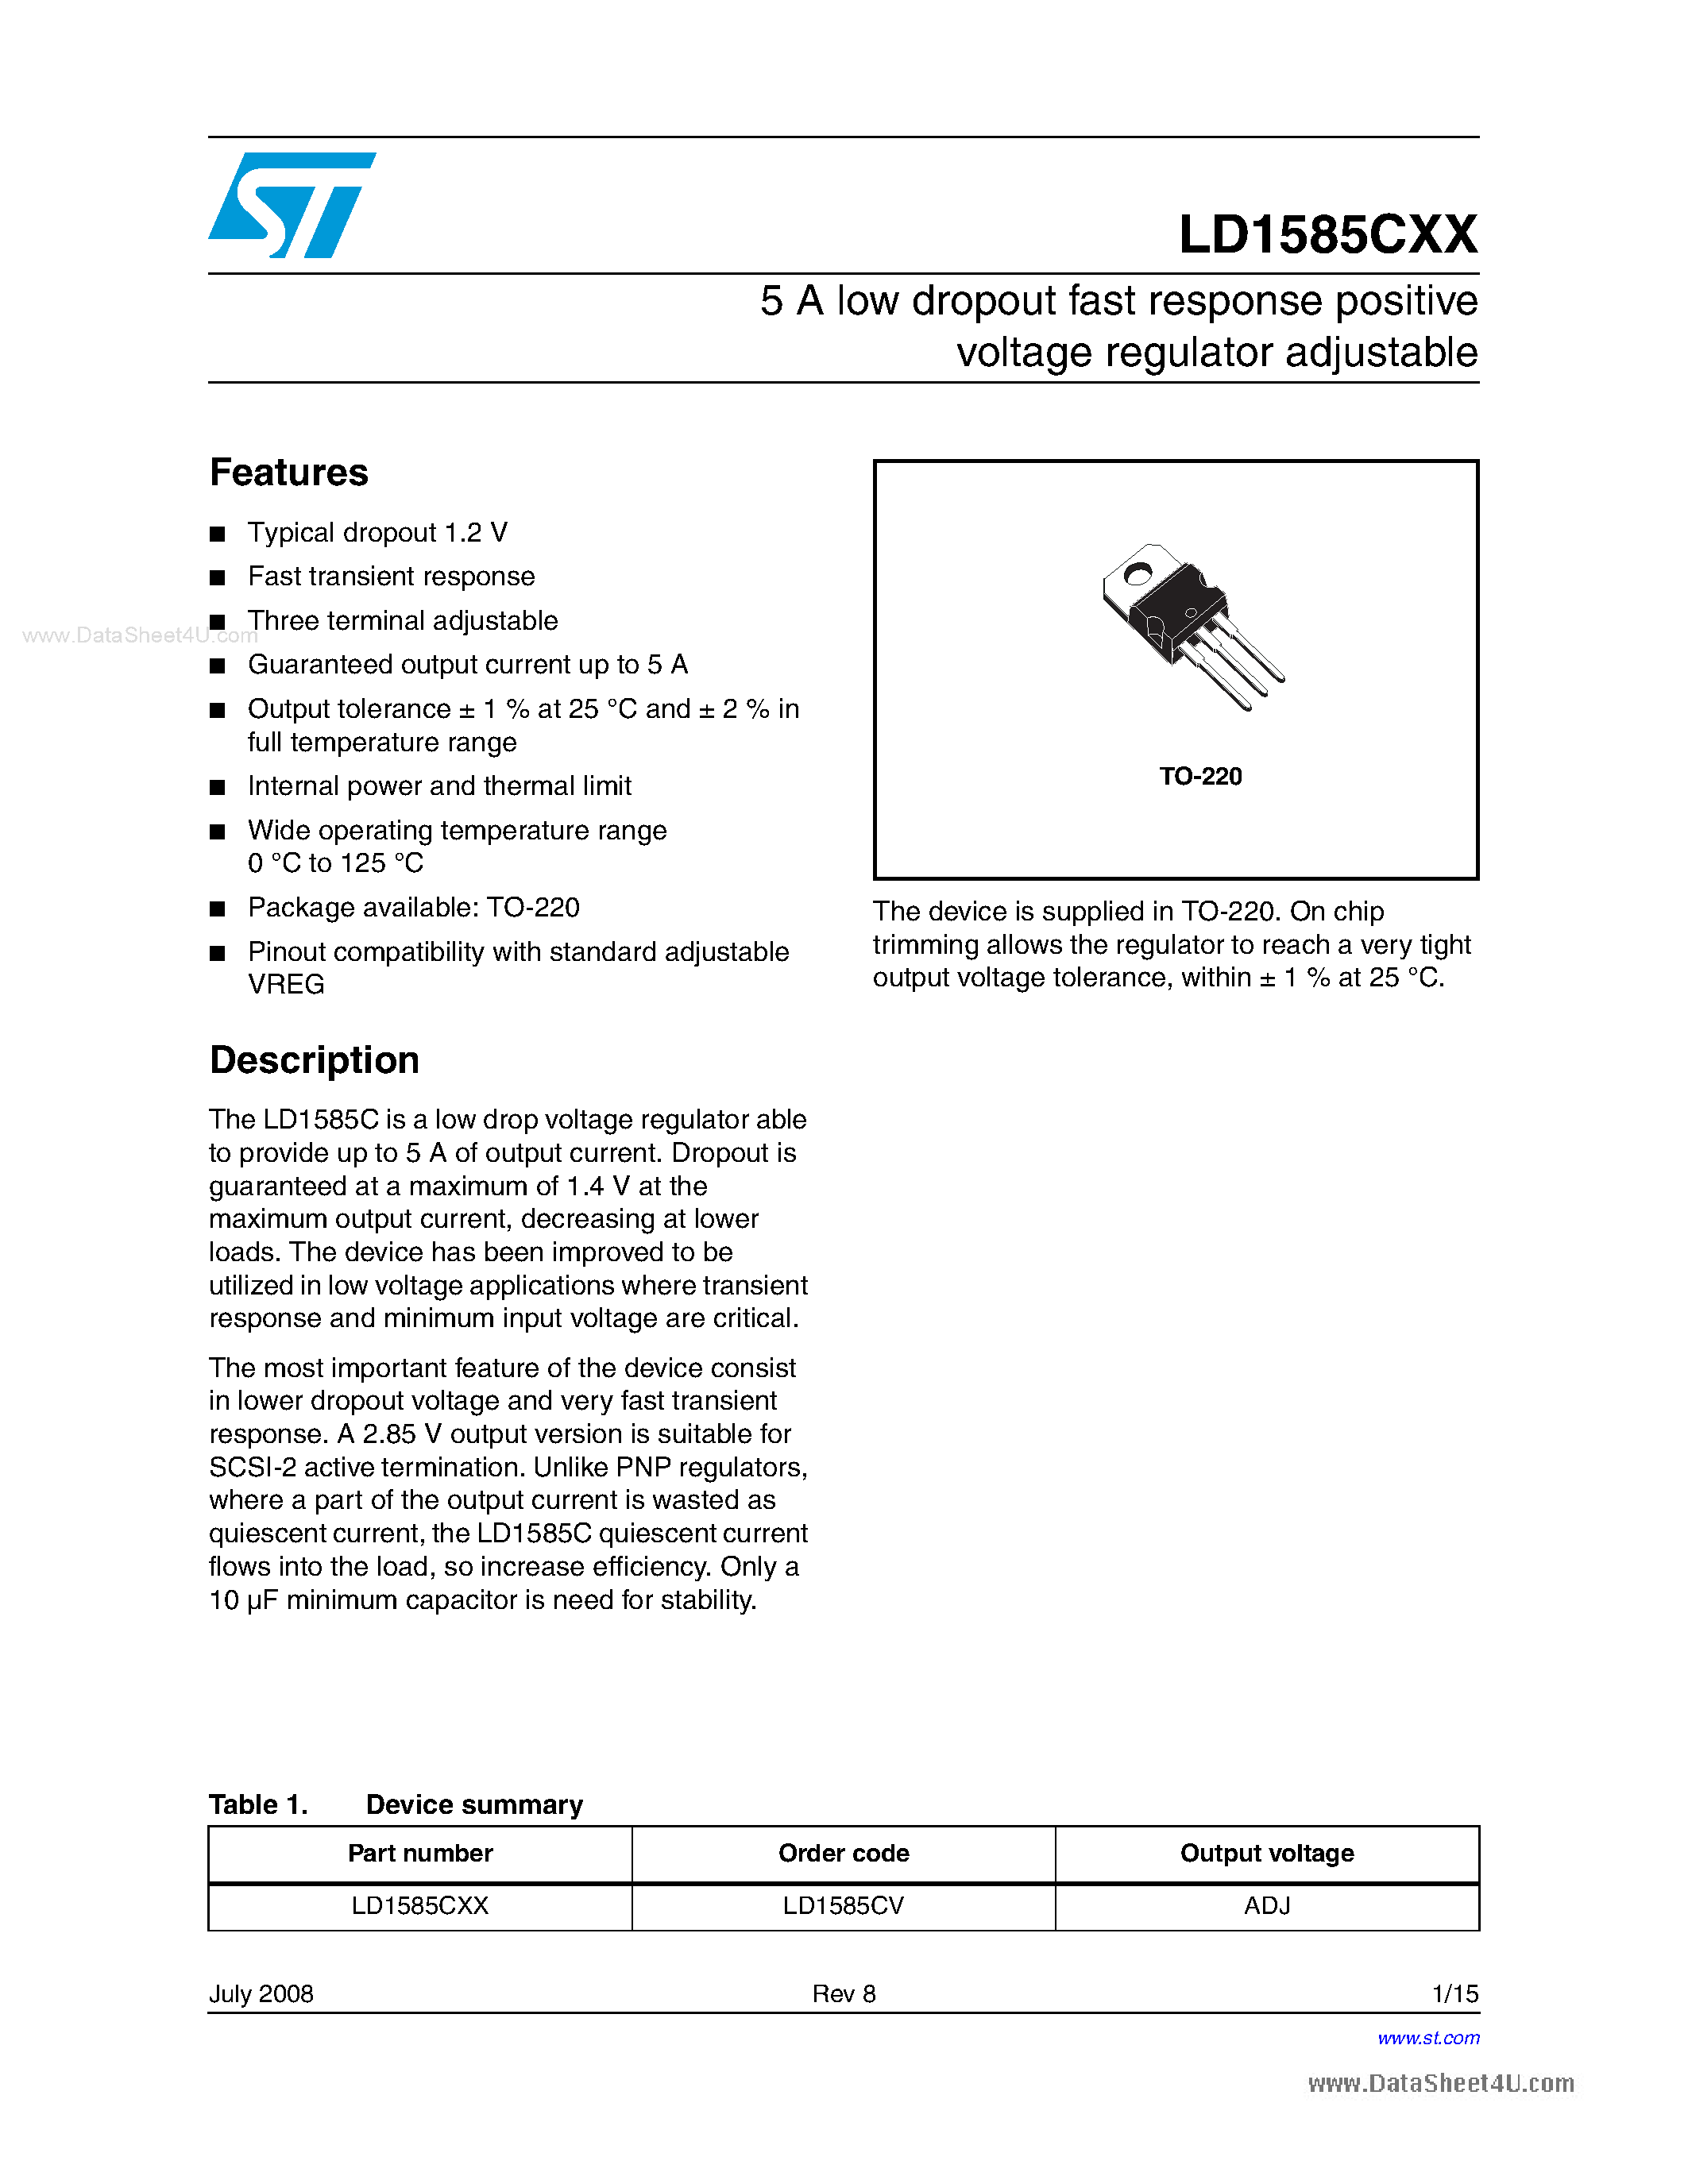 Даташит LD1585CXX - 5A low dropout fast response positive voltage regulator adjustable страница 1